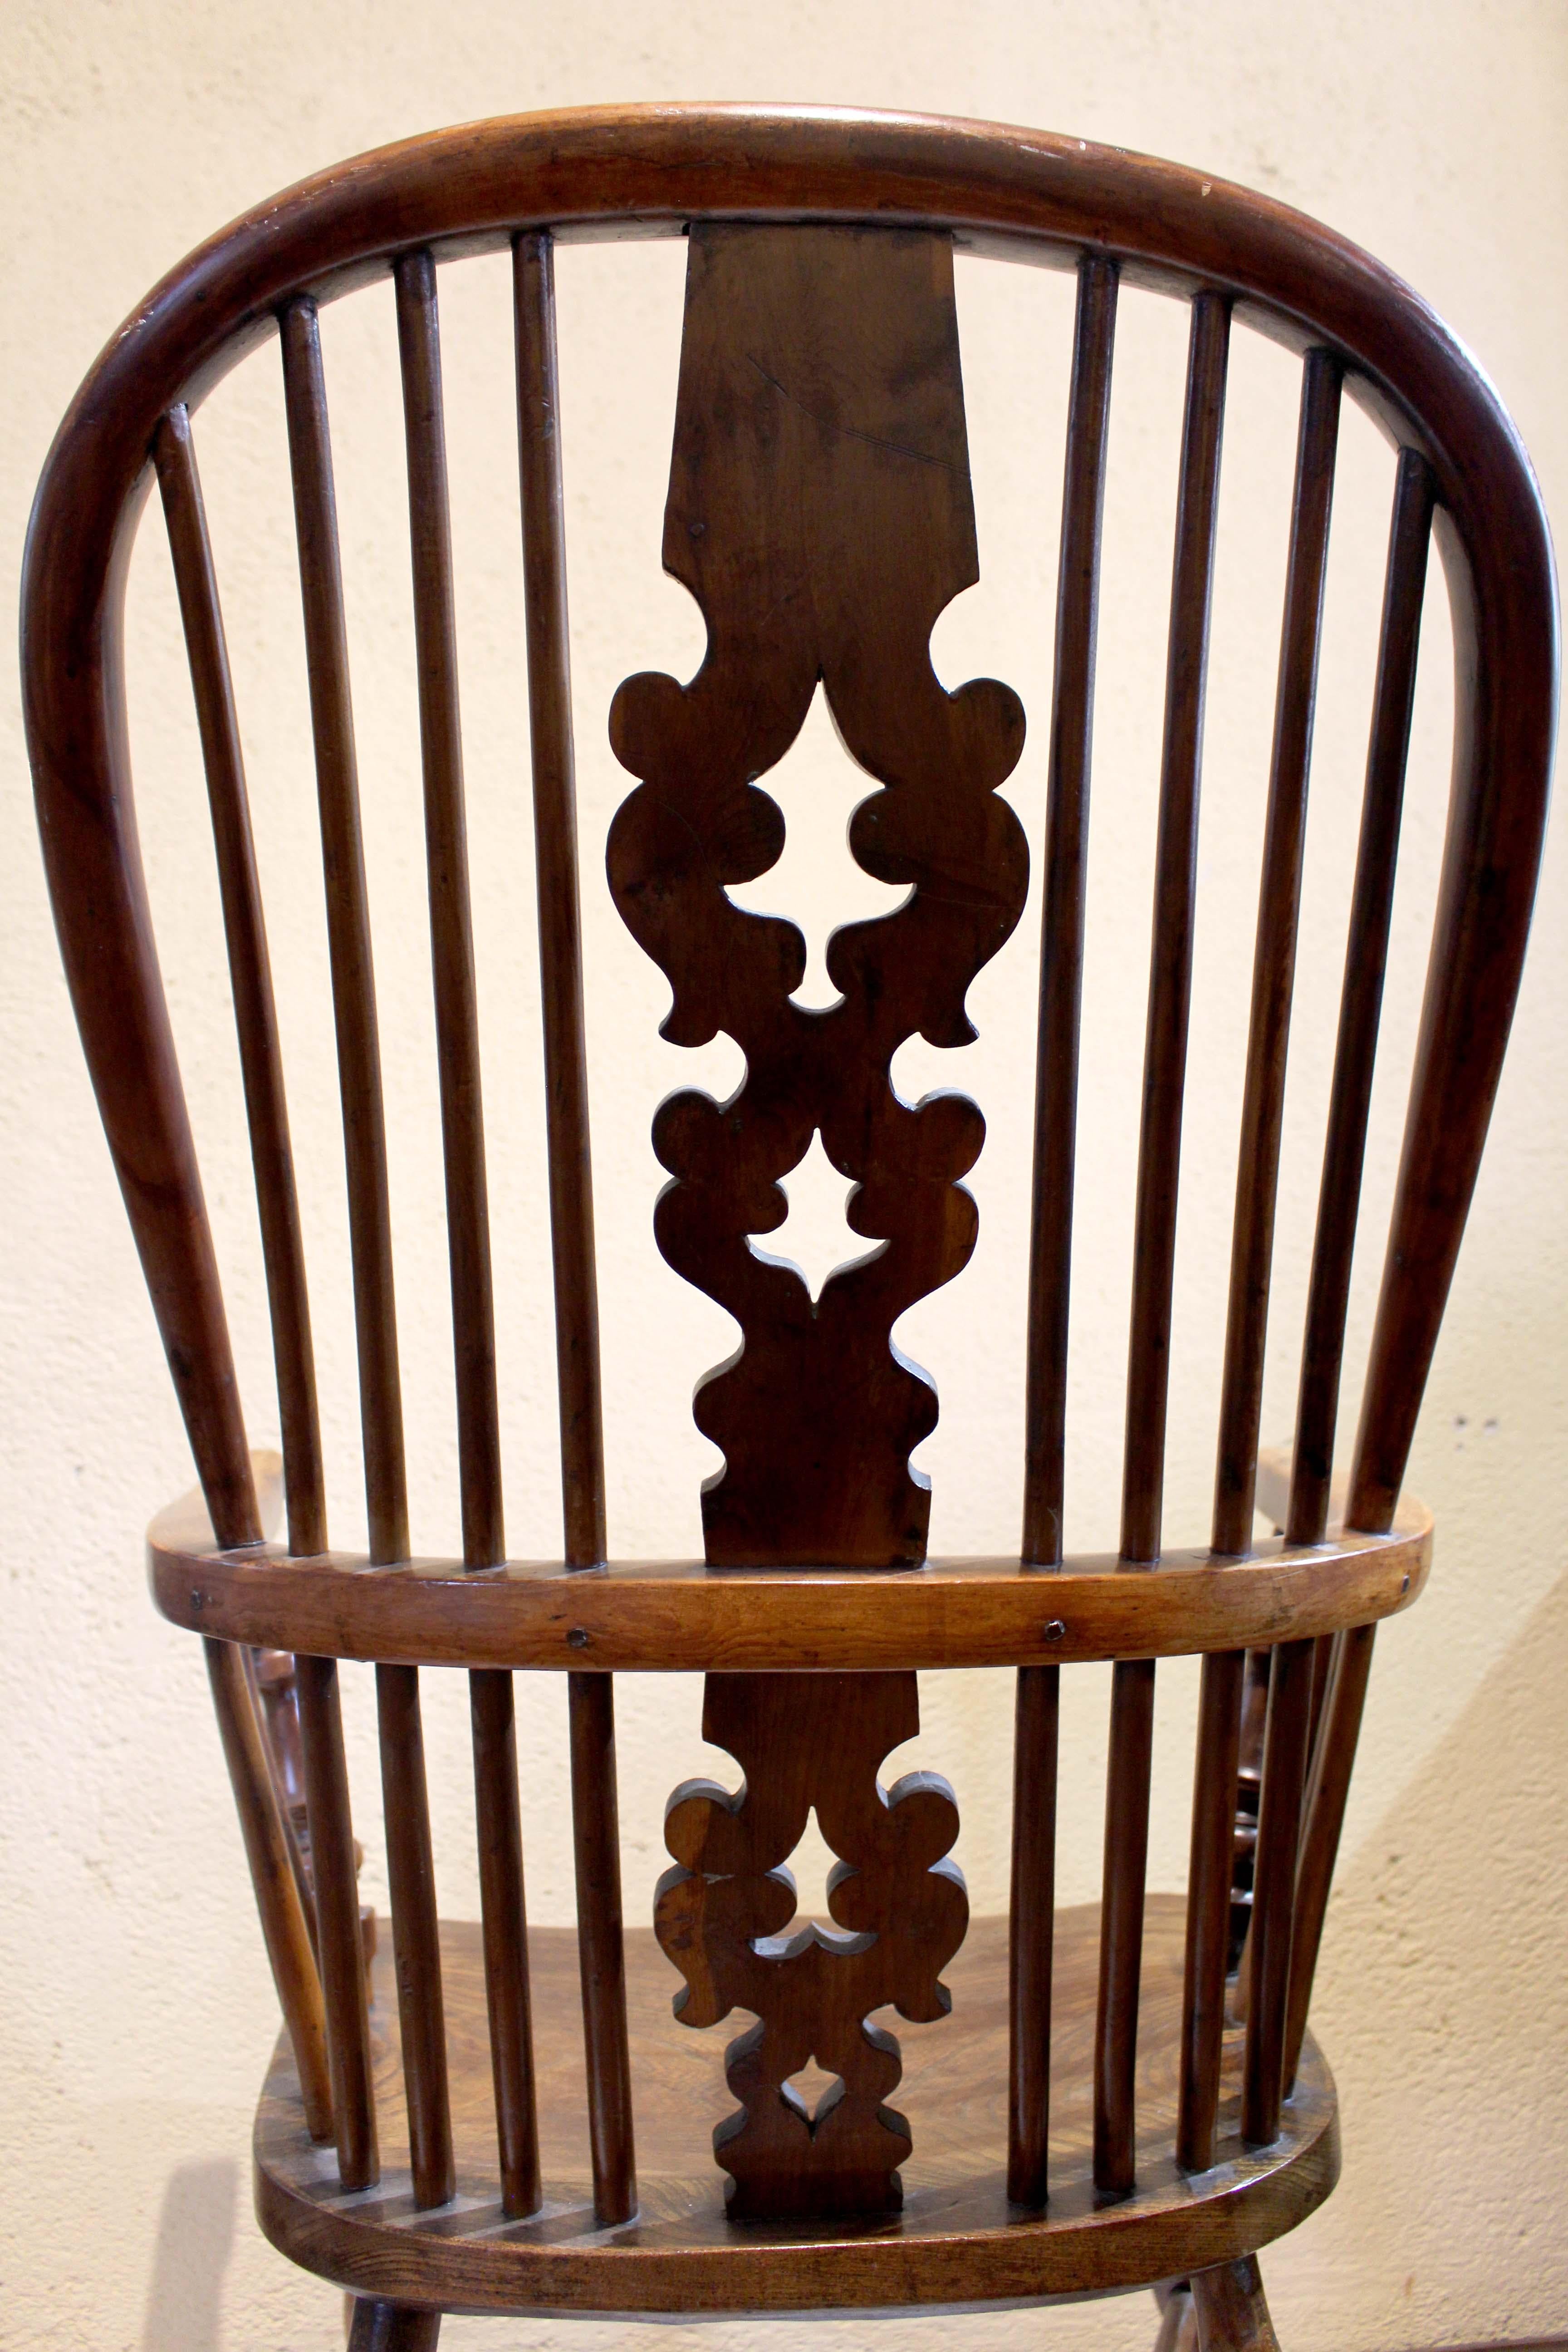 Circa 1830 English High Back Windsor Arm Chair, Yew Wood For Sale 1